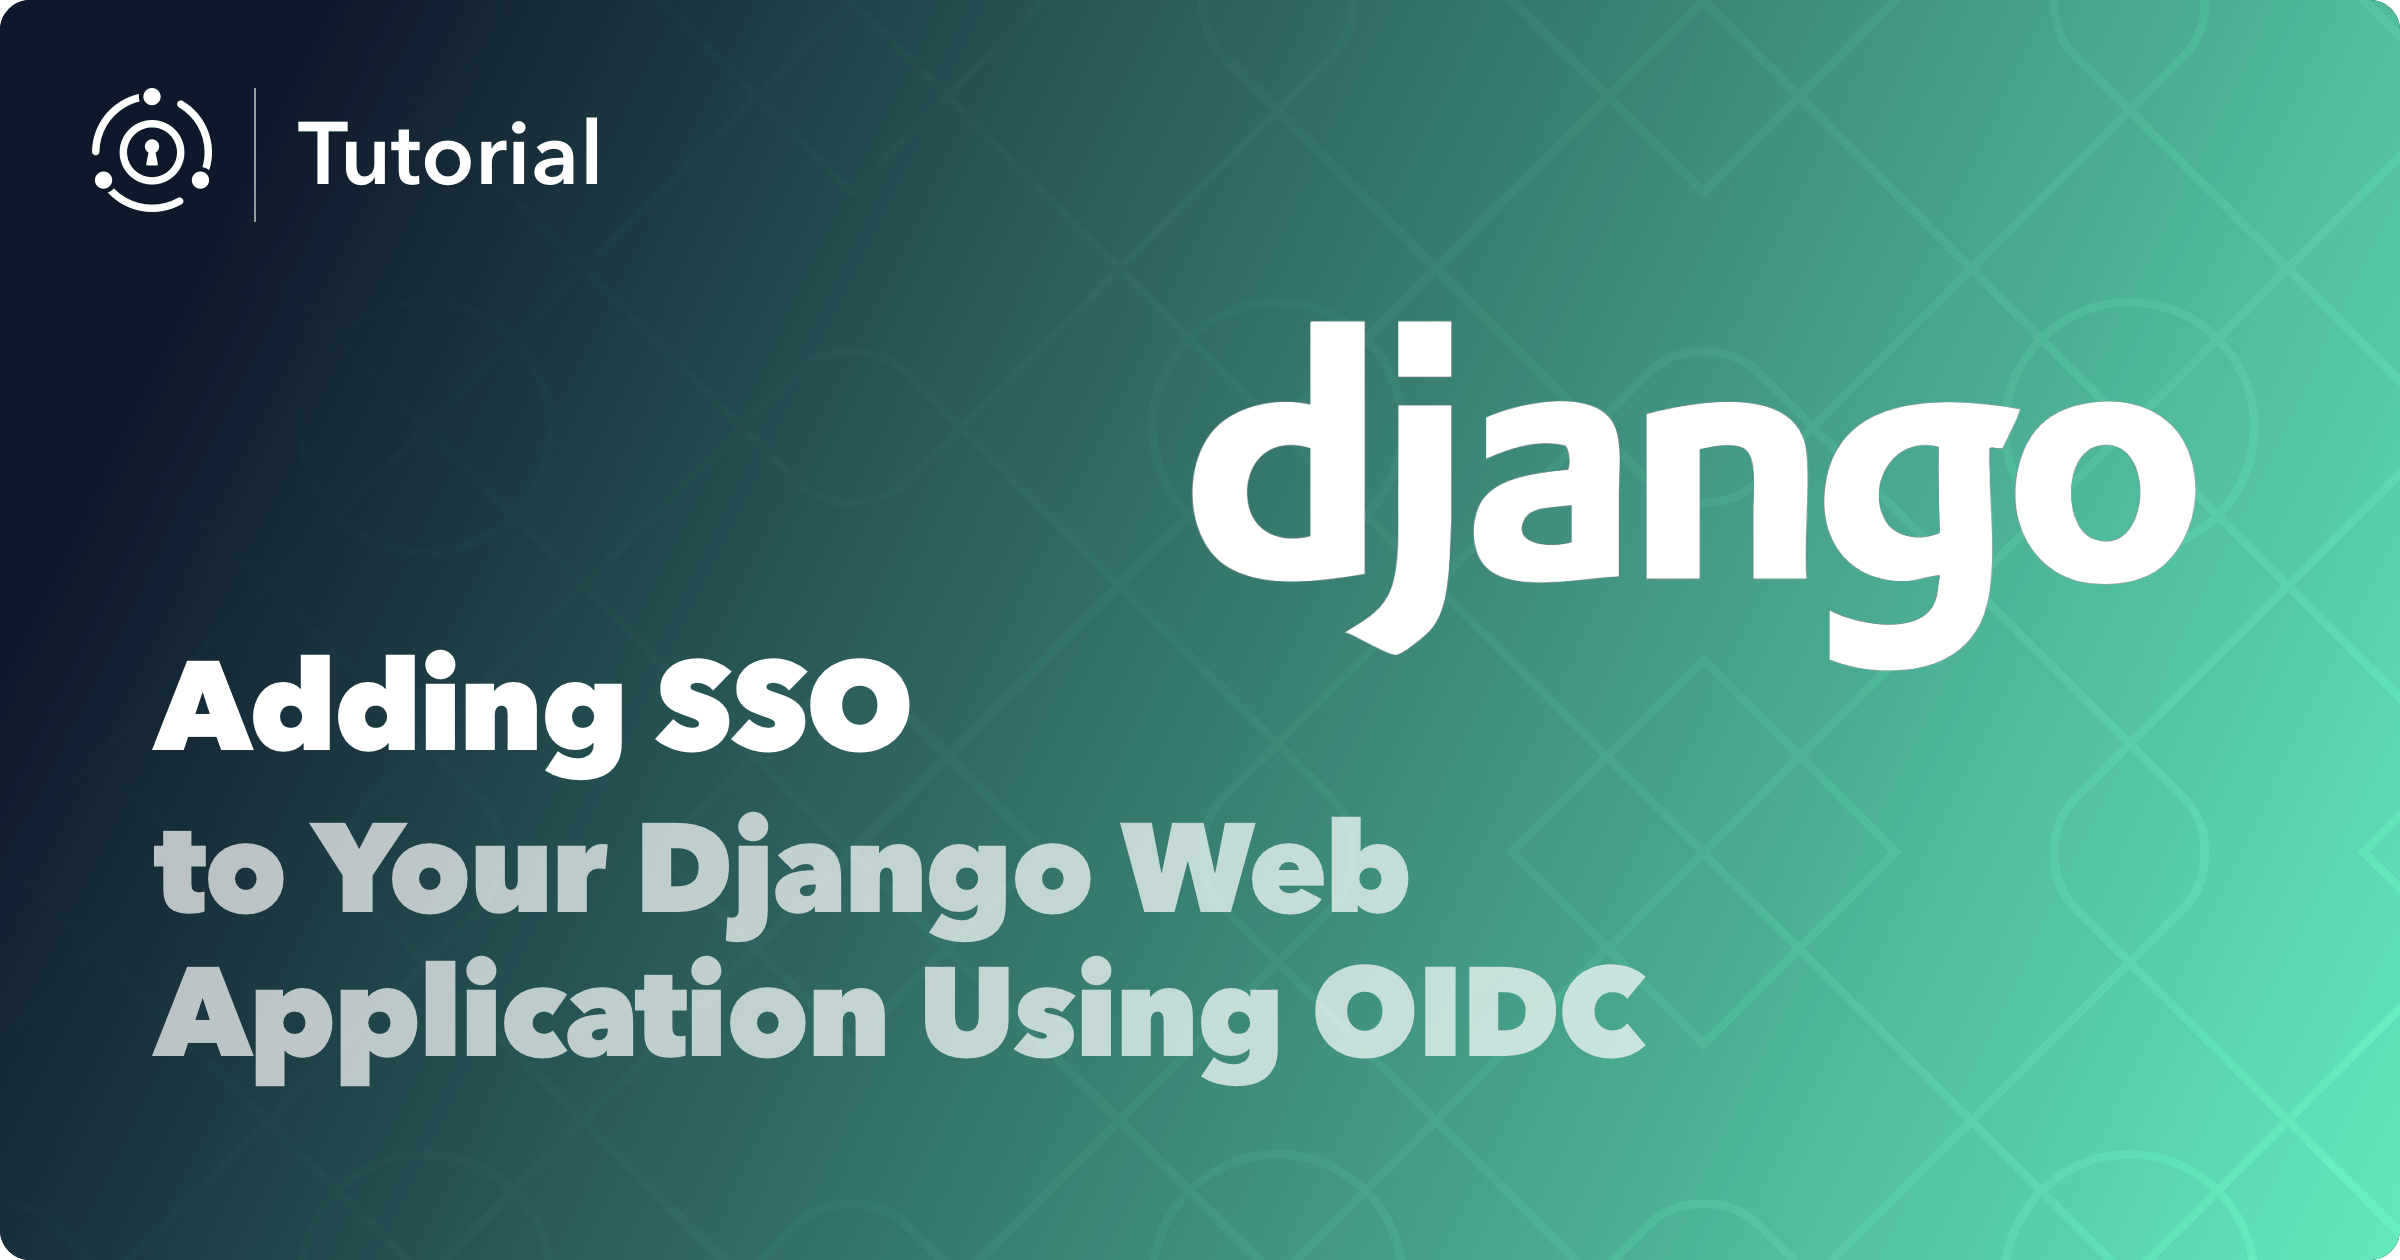 Adding single sign-on to your Django web application using OIDC